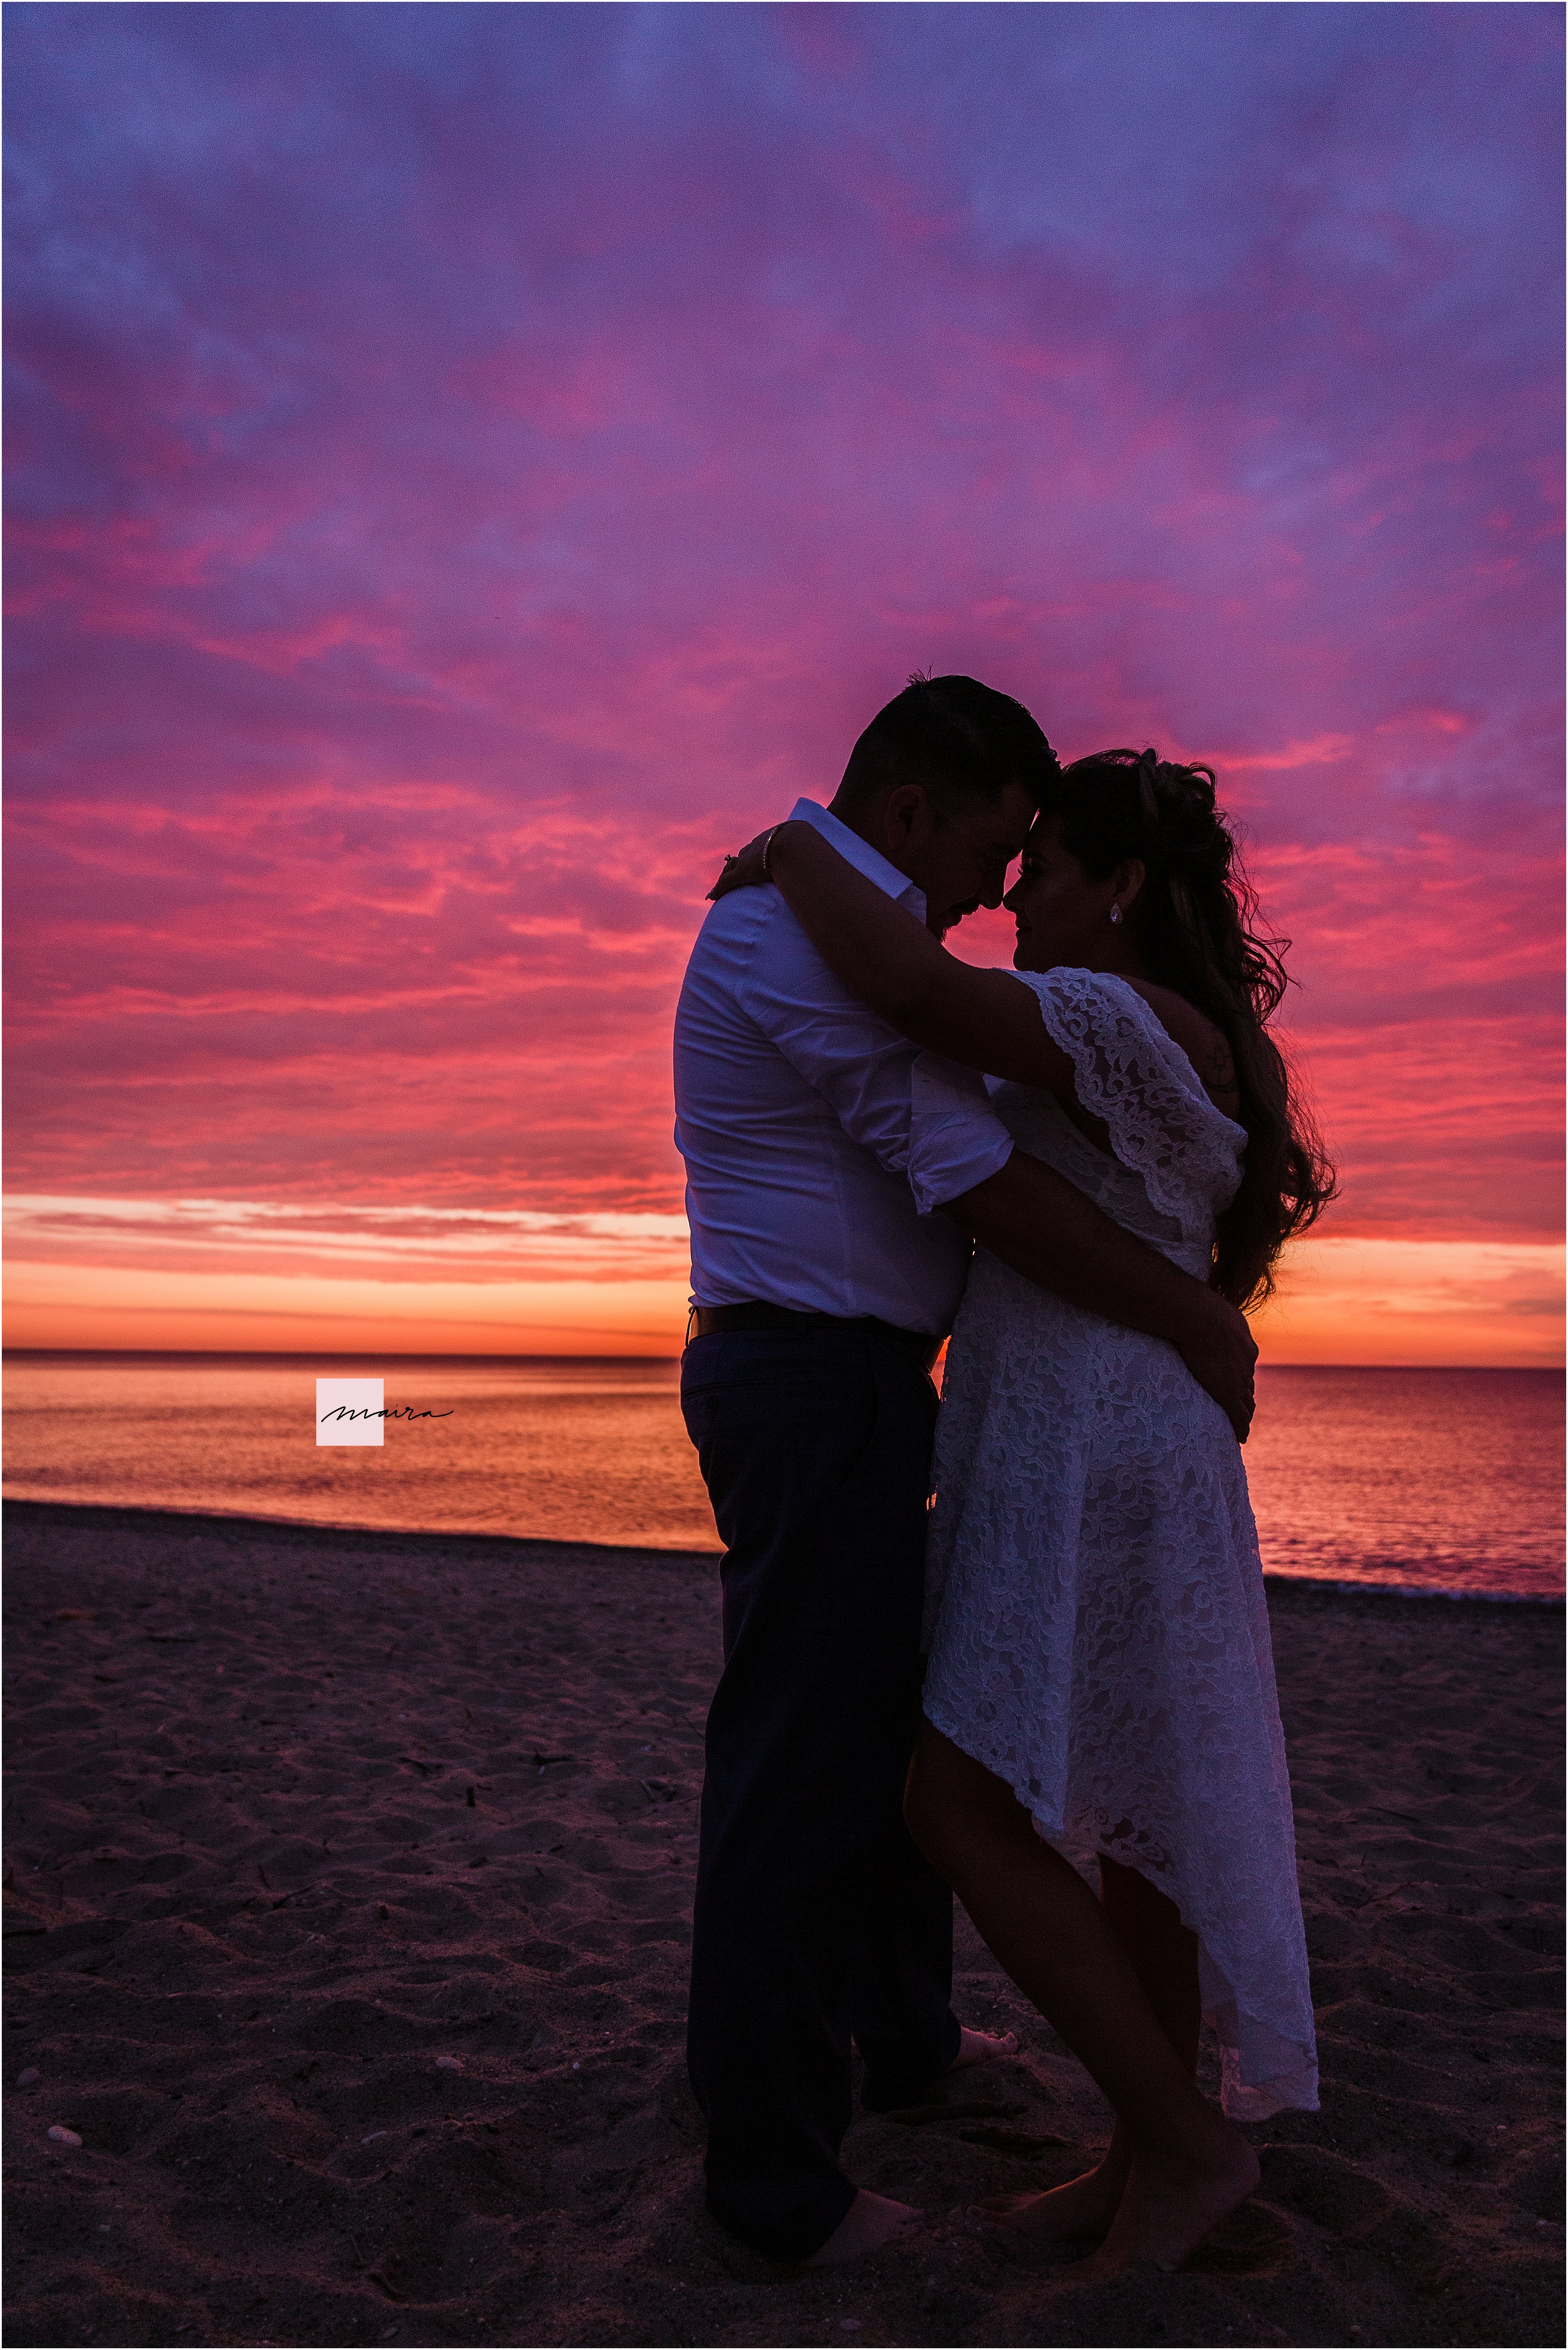 Sunrise engagement session, Sunrise, Illinois State Park Resort, Beach Park, IL, Waukegan, Couple, Wedding, Ring, Love, Sunrise, Engagement pictures, Engagement session, Groom, Bride, Roses